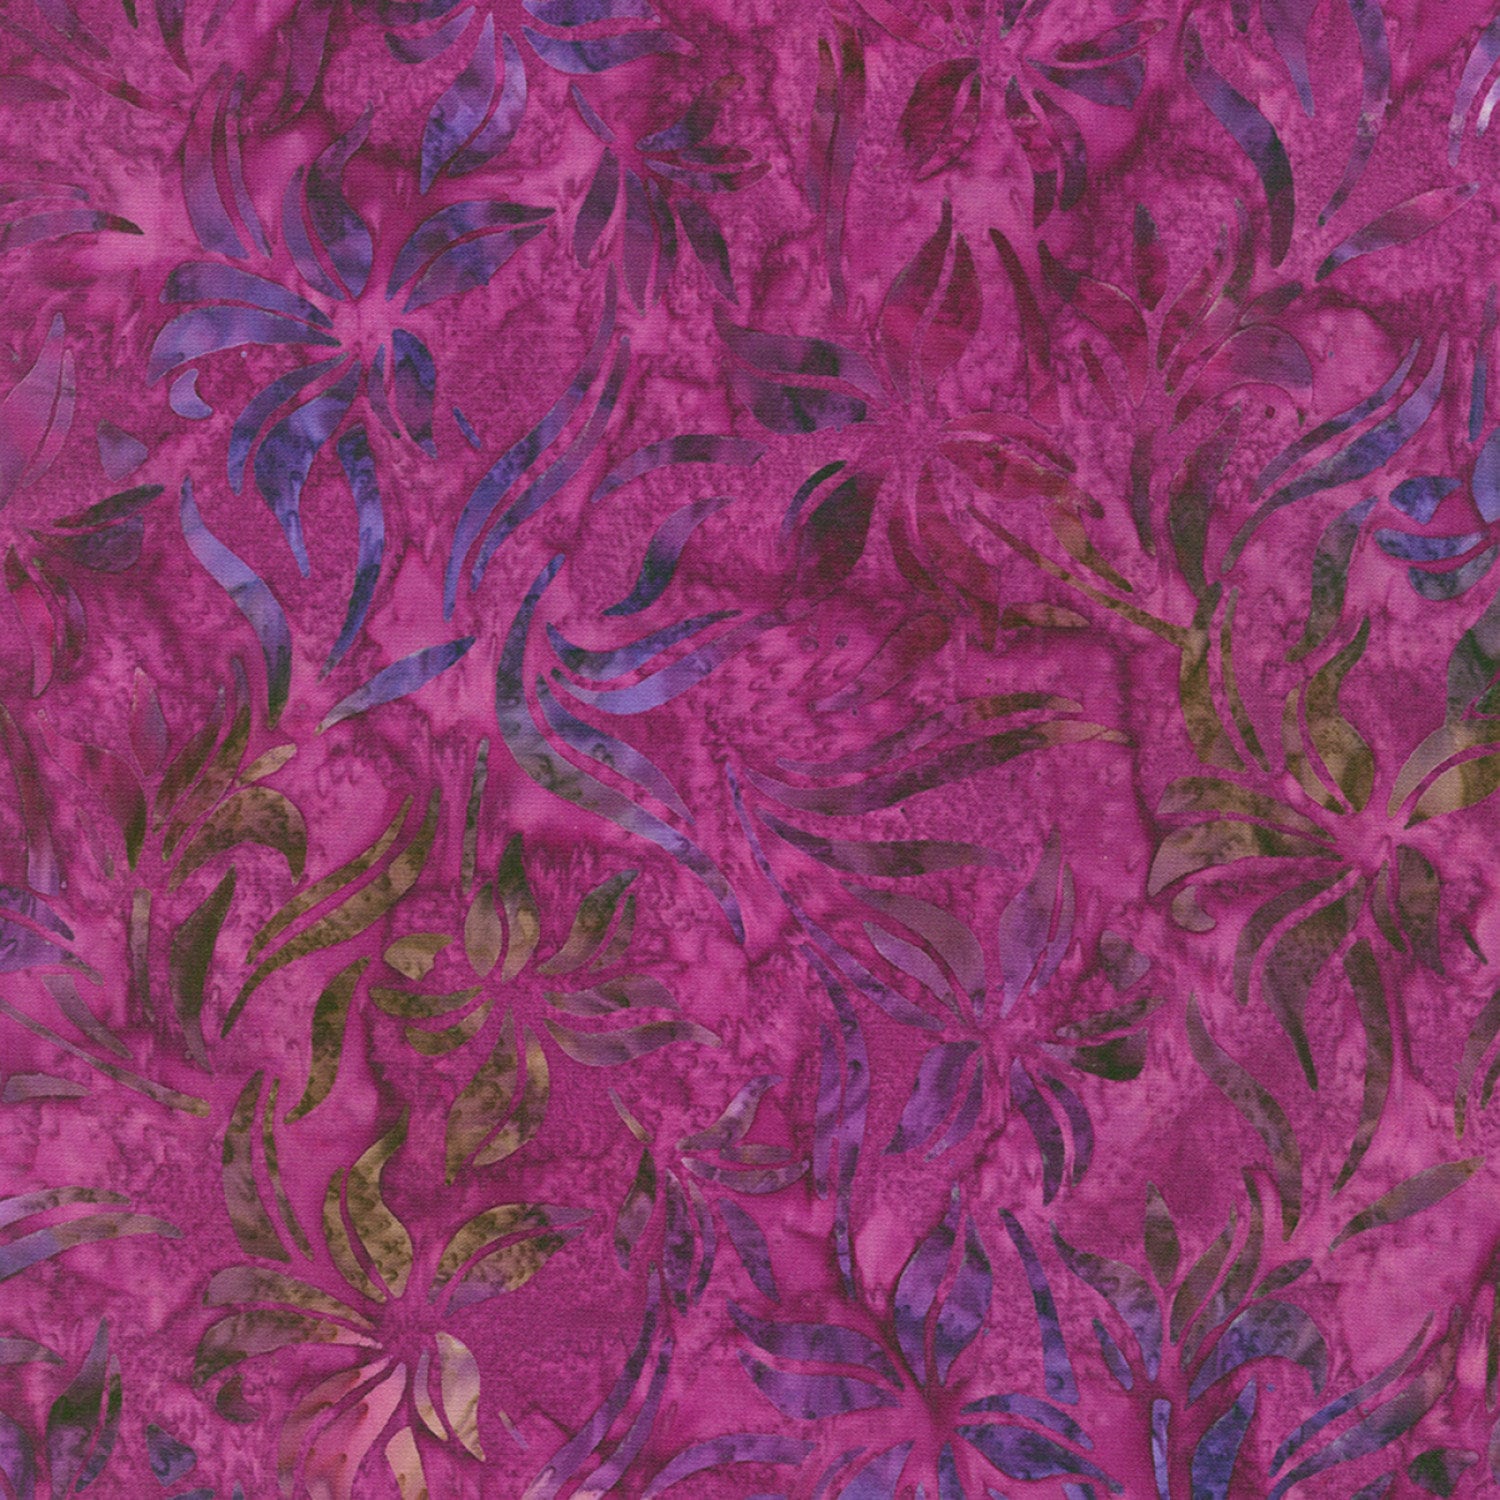 Lily Bella Batik Charm Squares, Robert Kaufman CHS-1170-42, Artisan Batiks Purple Green Floral Charm Pack, 5" Inch Precut Fabric Squares